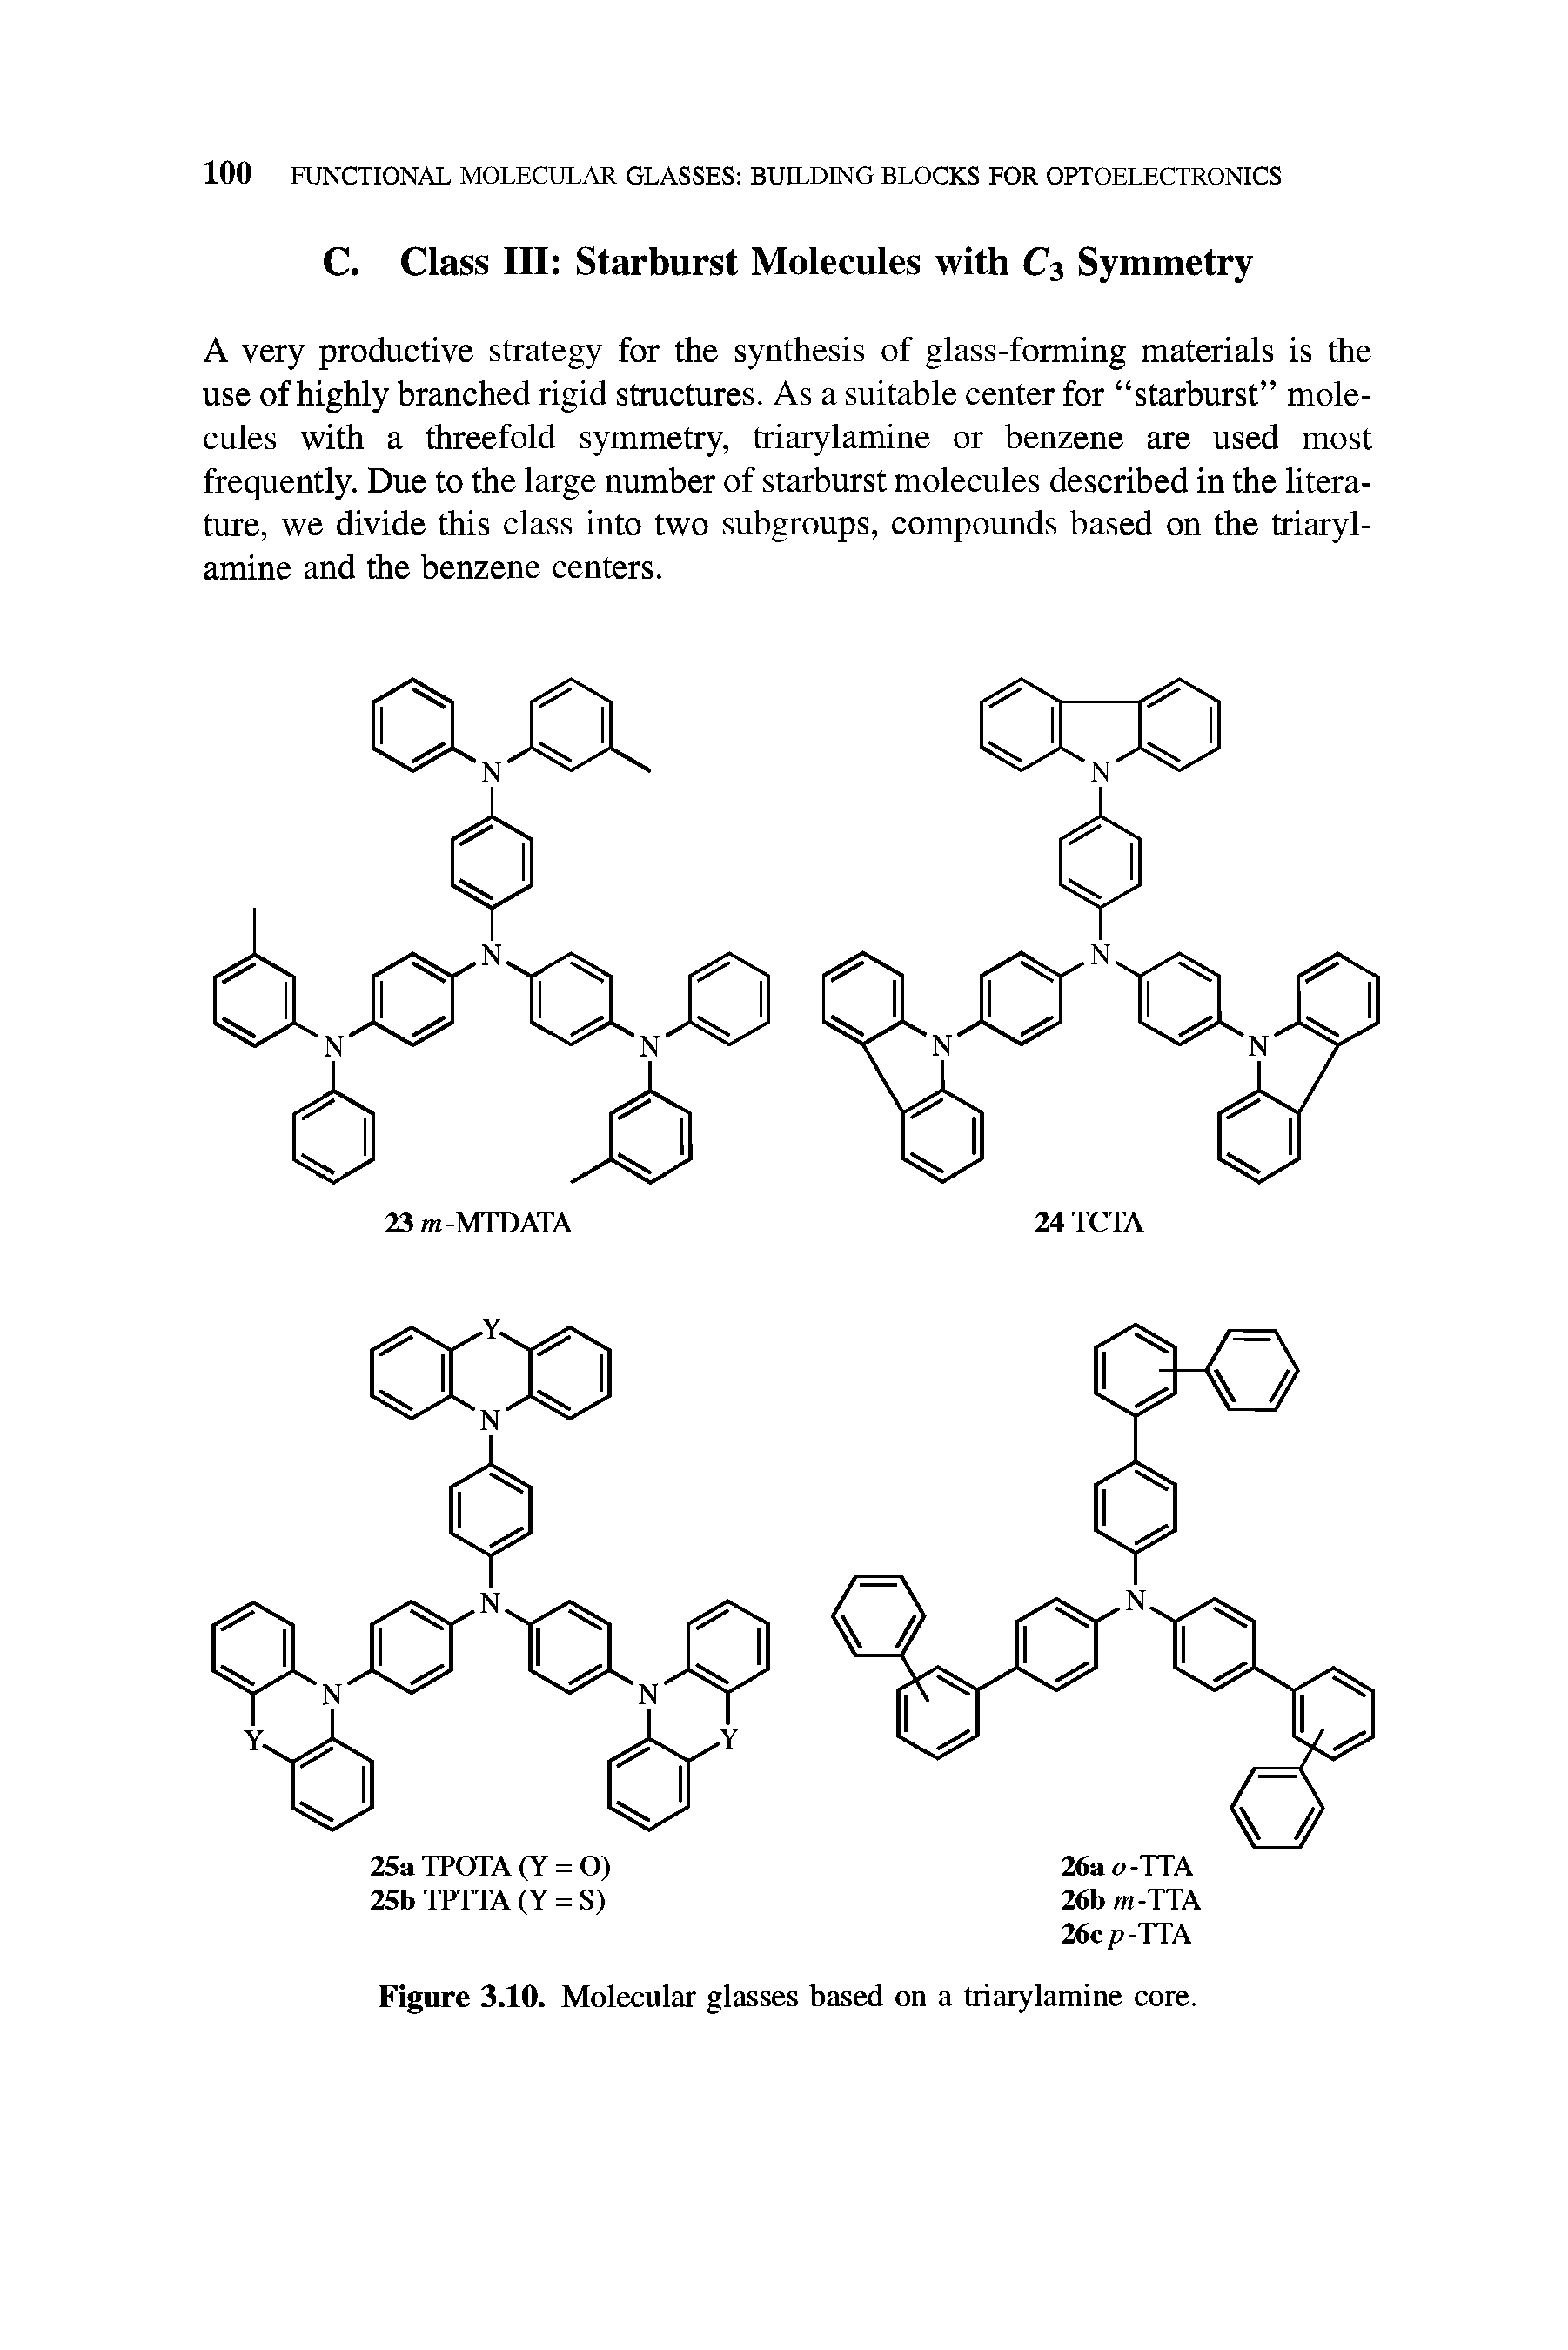 Figure 3.10. Molecular glasses based on a triarylamine core.